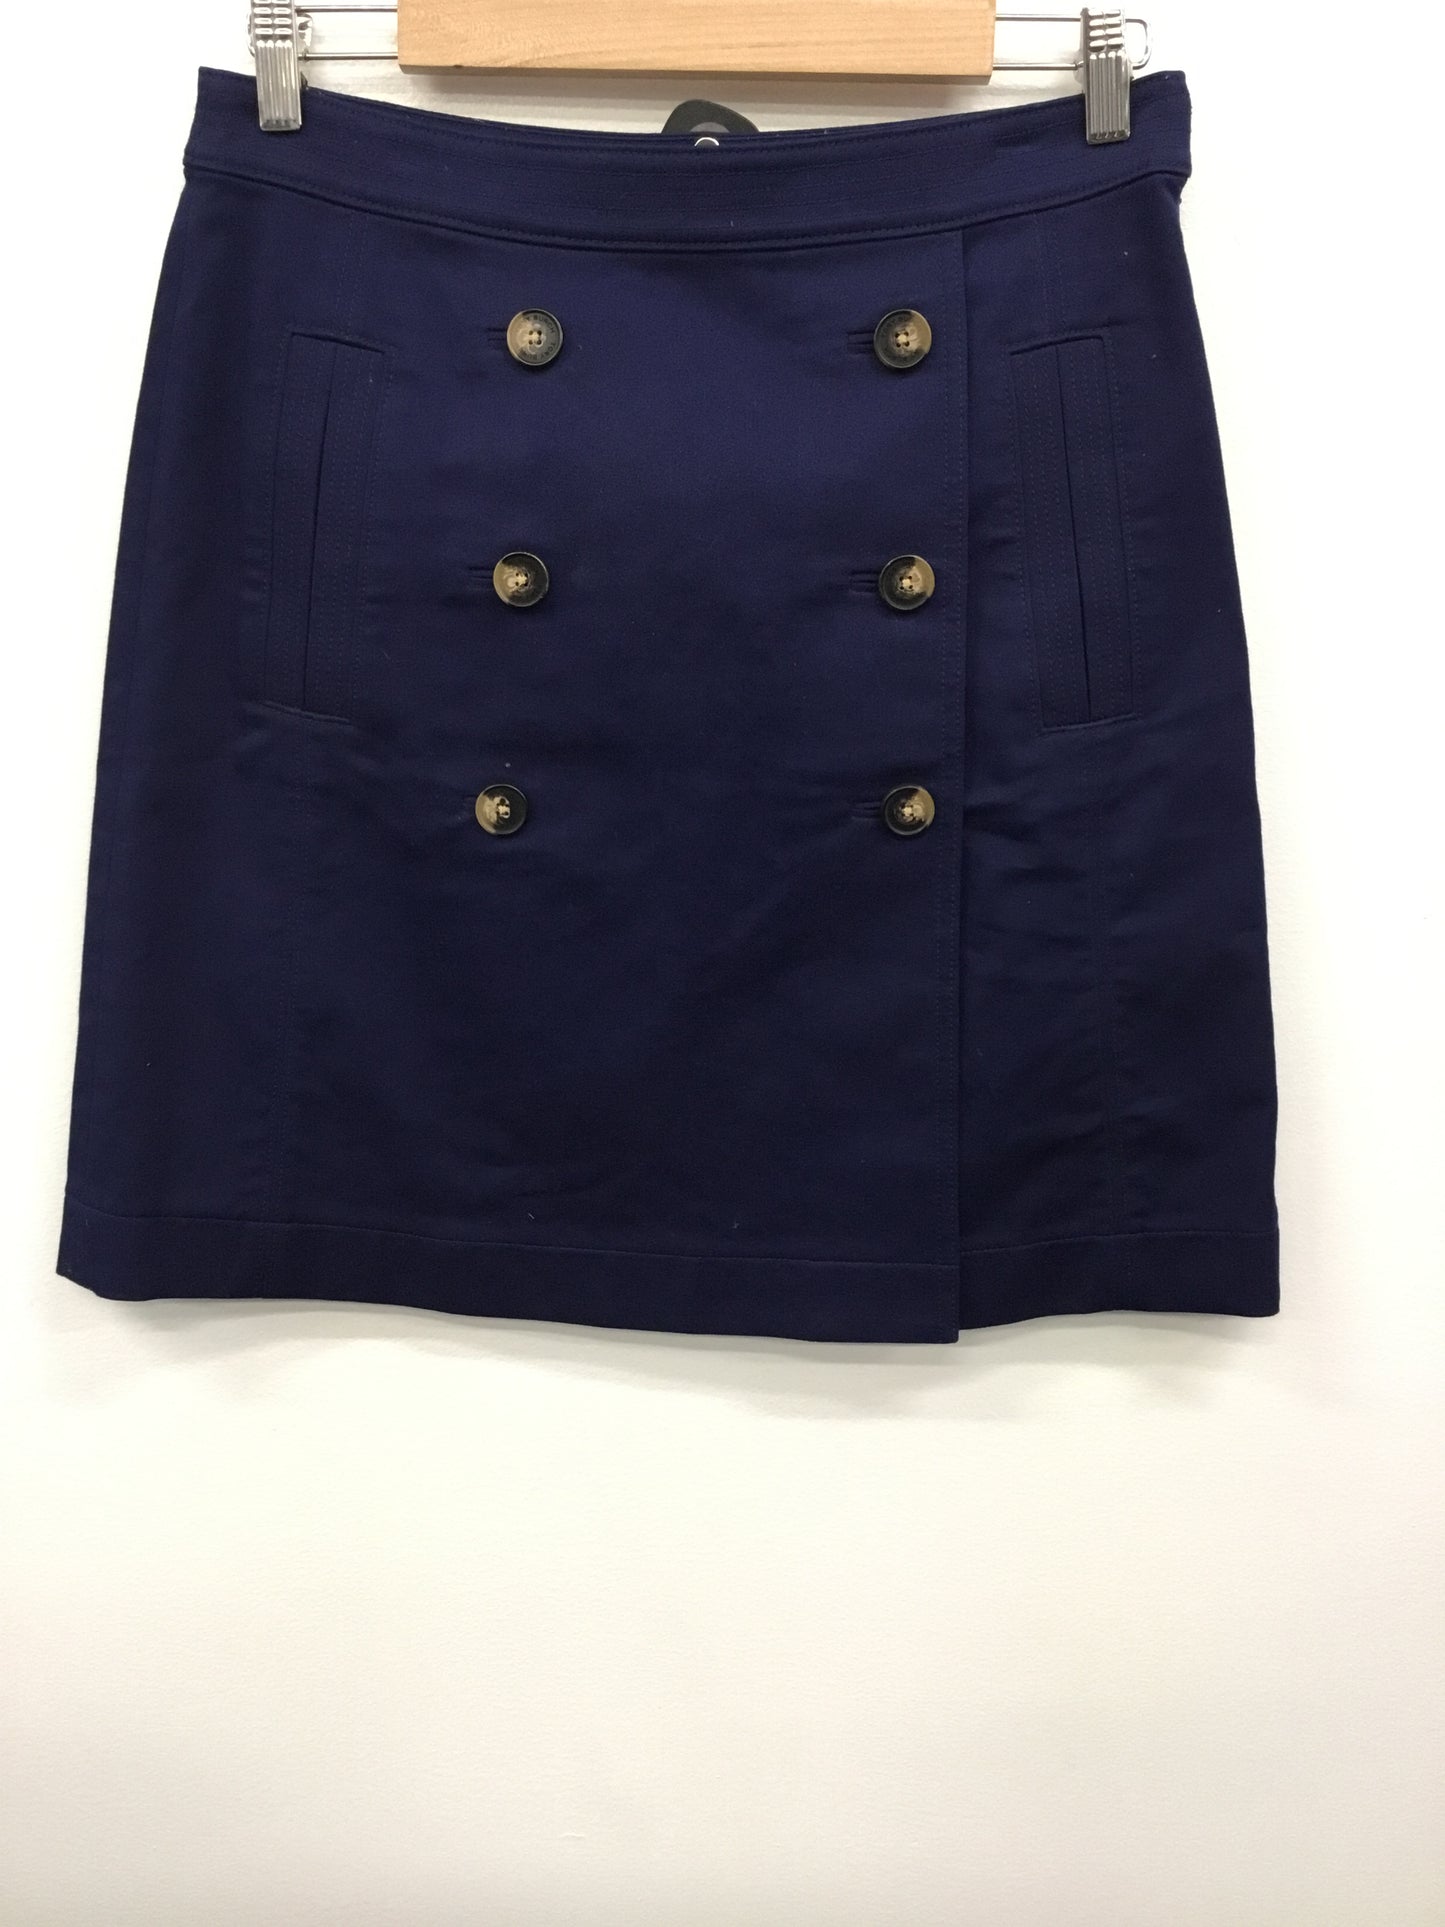 Skirt Designer By Tory Burch  Size: 8